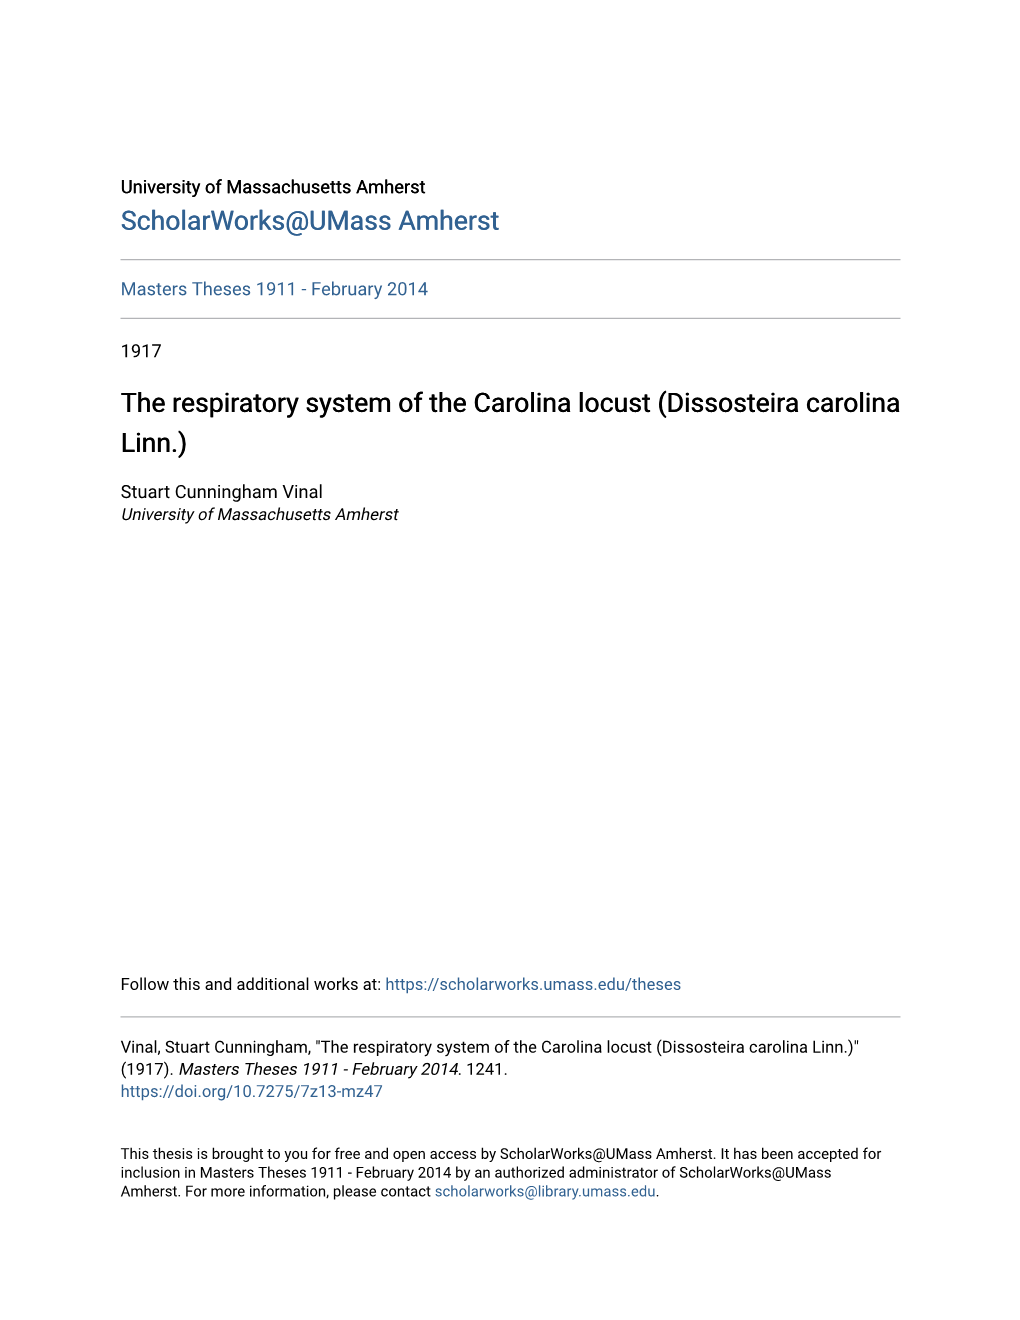 The Respiratory System of the Carolina Locust (Dissosteira Carolina Linn.)